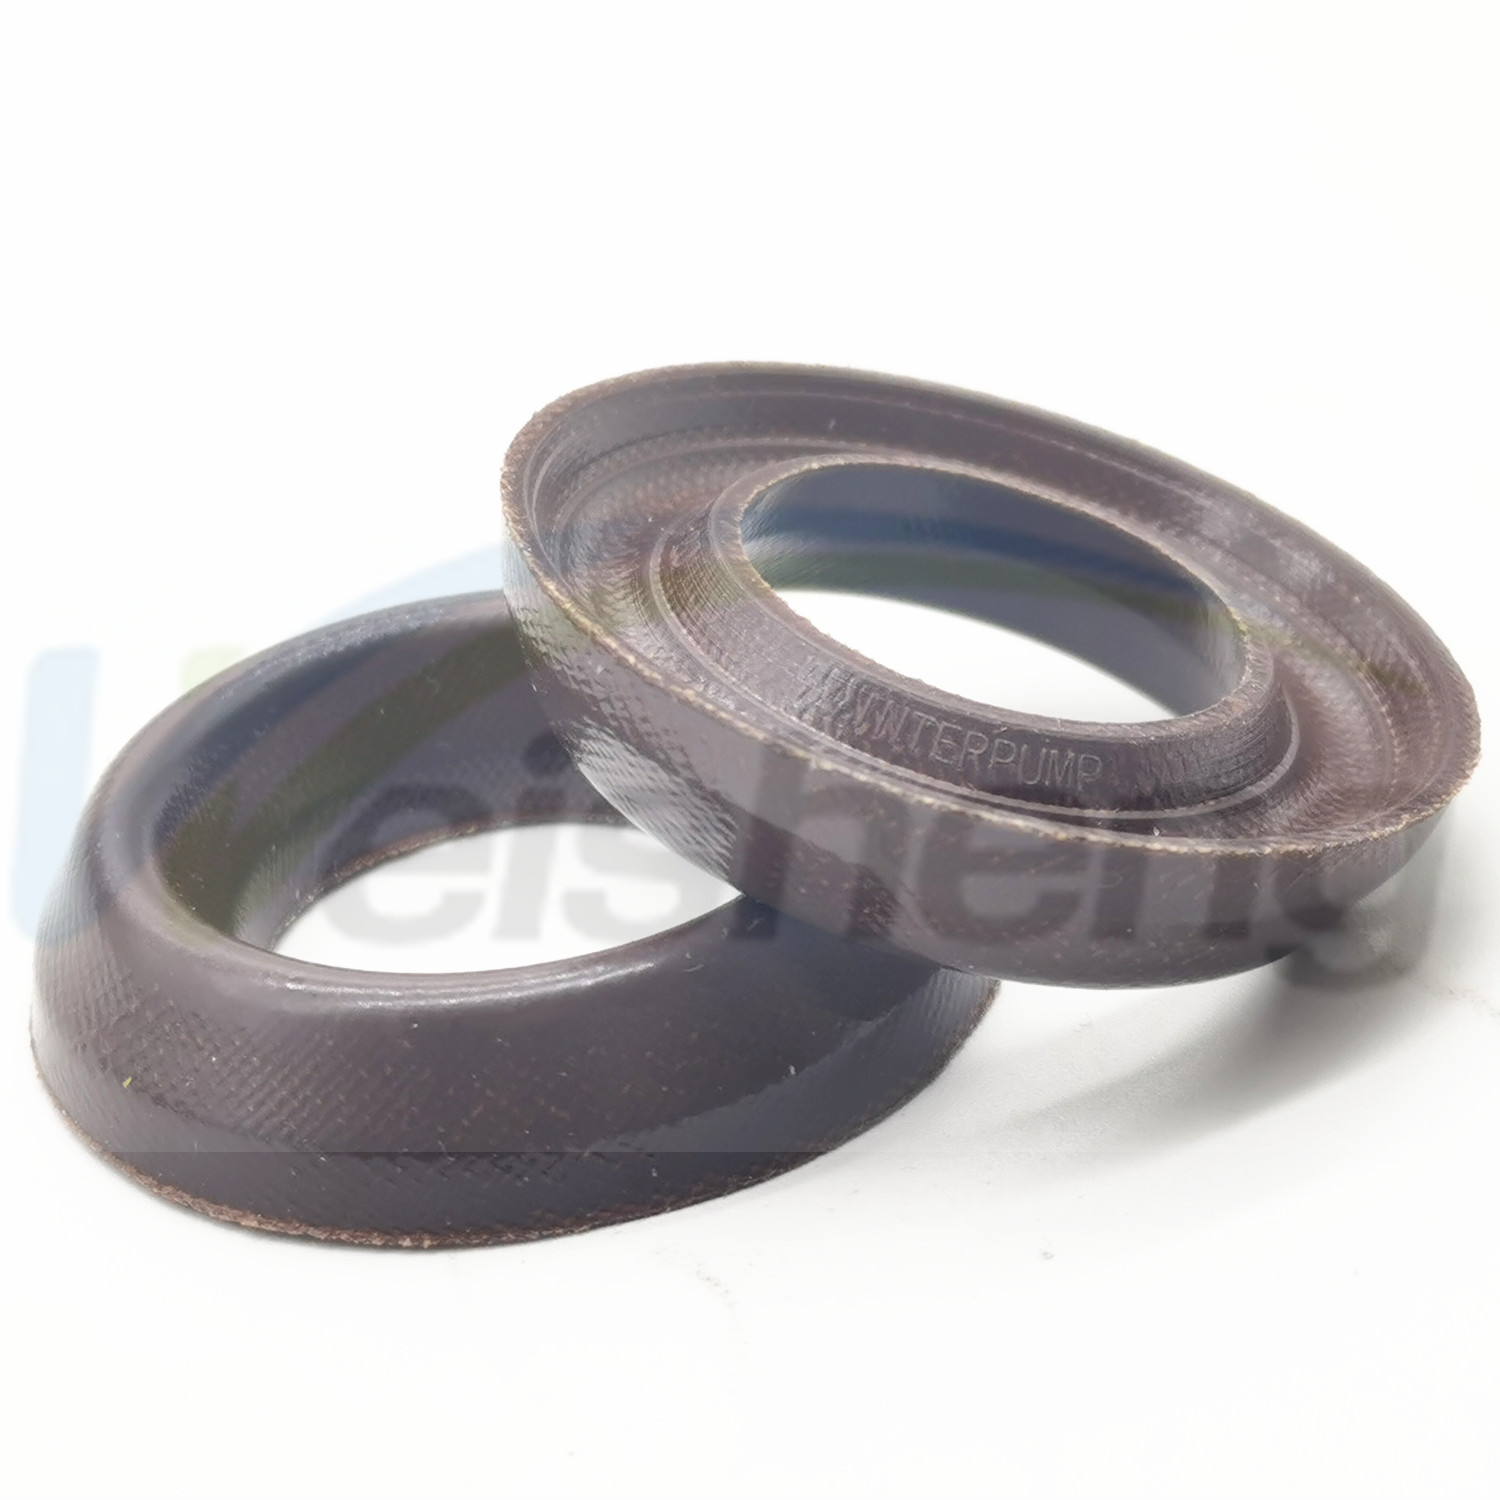 WS-SEALS 20*35 Interpump high pressure  seals rubber FKM  fabric  v packing seals 